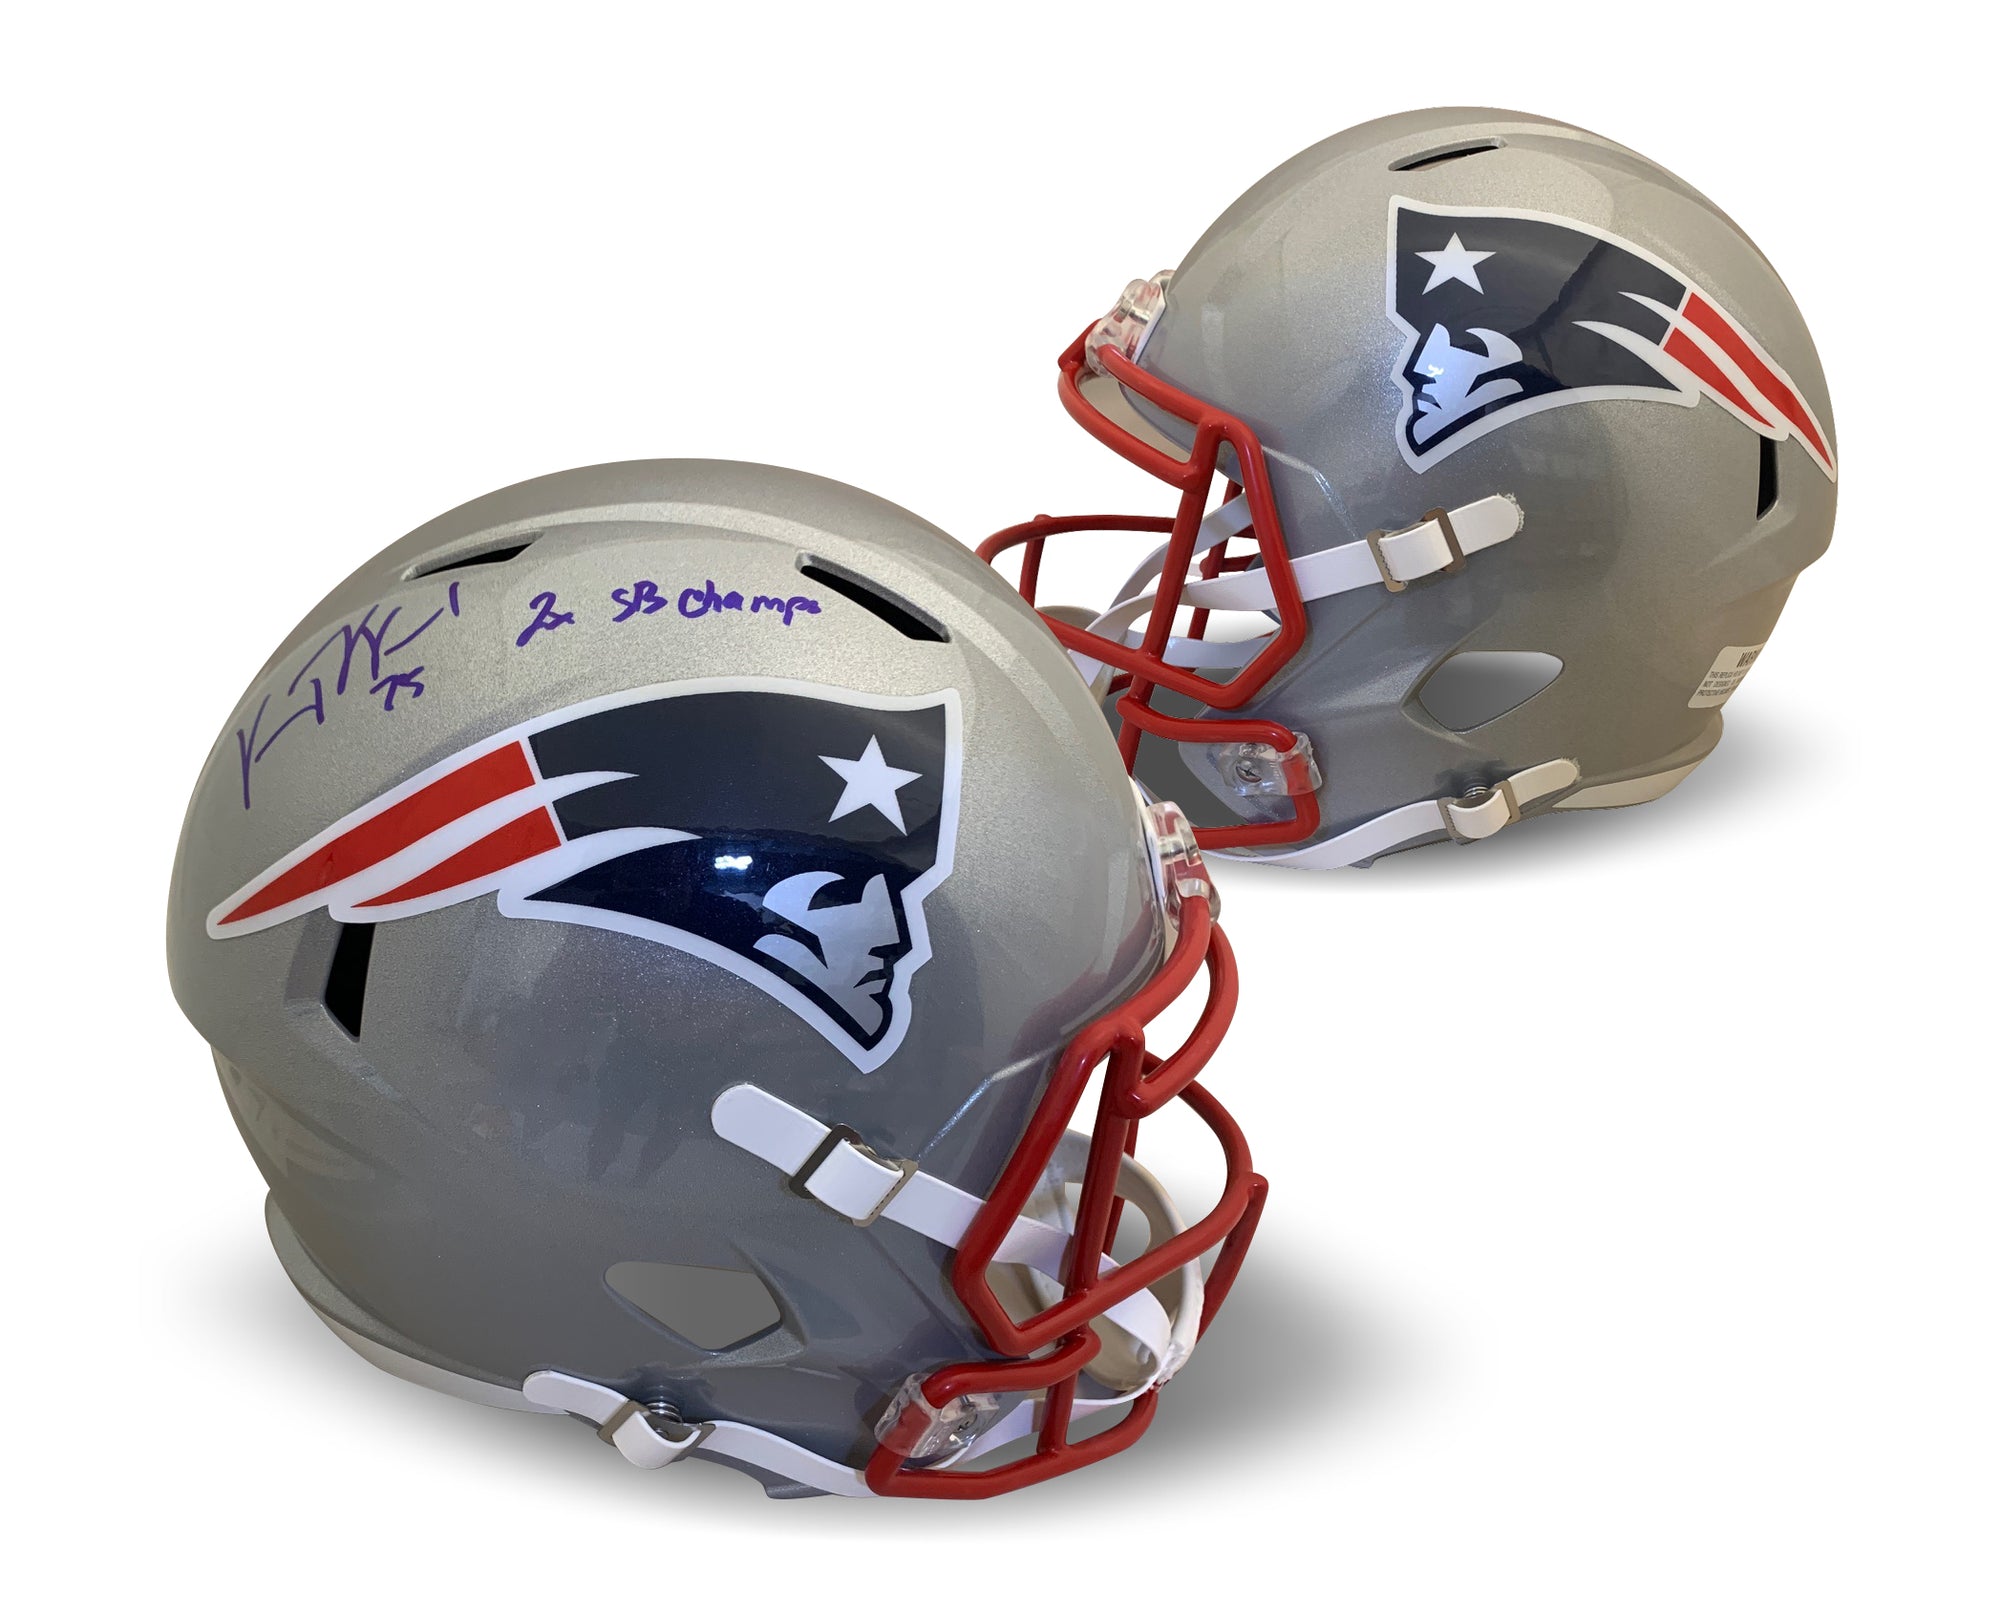 Vince Wilfork Autographed New England Patriots Signed Football Full Size Replica Helmet 2 x SUPER BOWL CHAMP JSA COA-Powers Sports Memorabilia